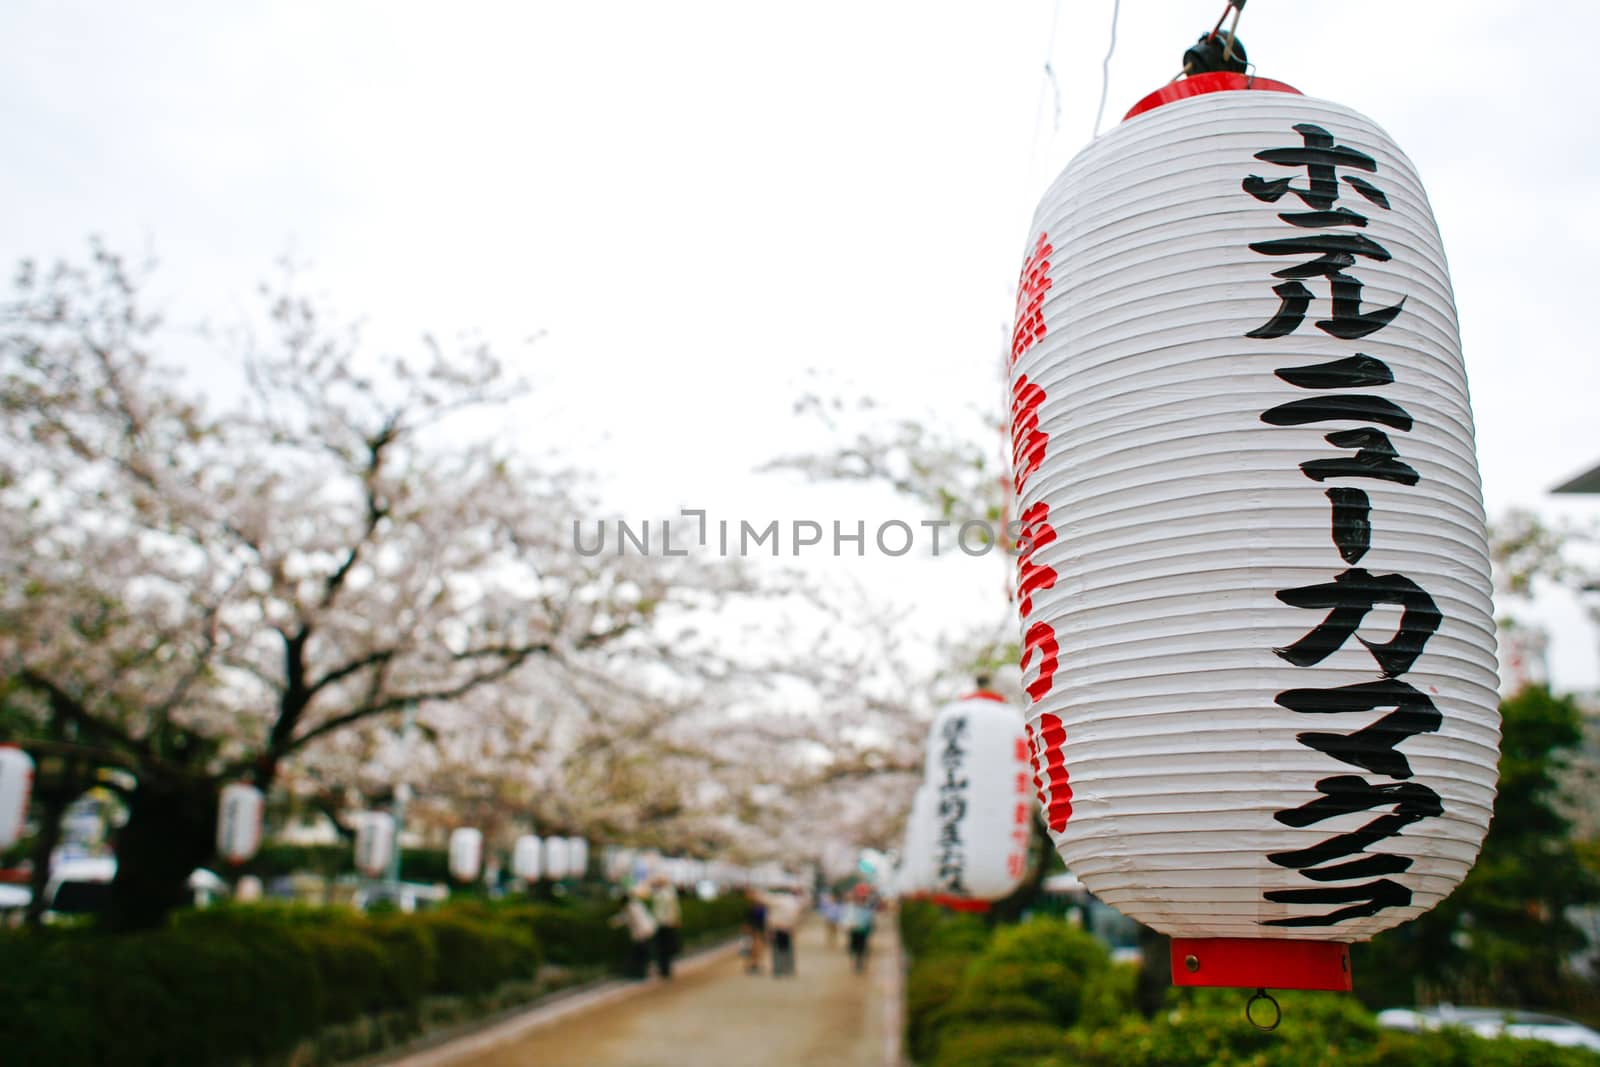 White paper lanterns amongst cherry blossom